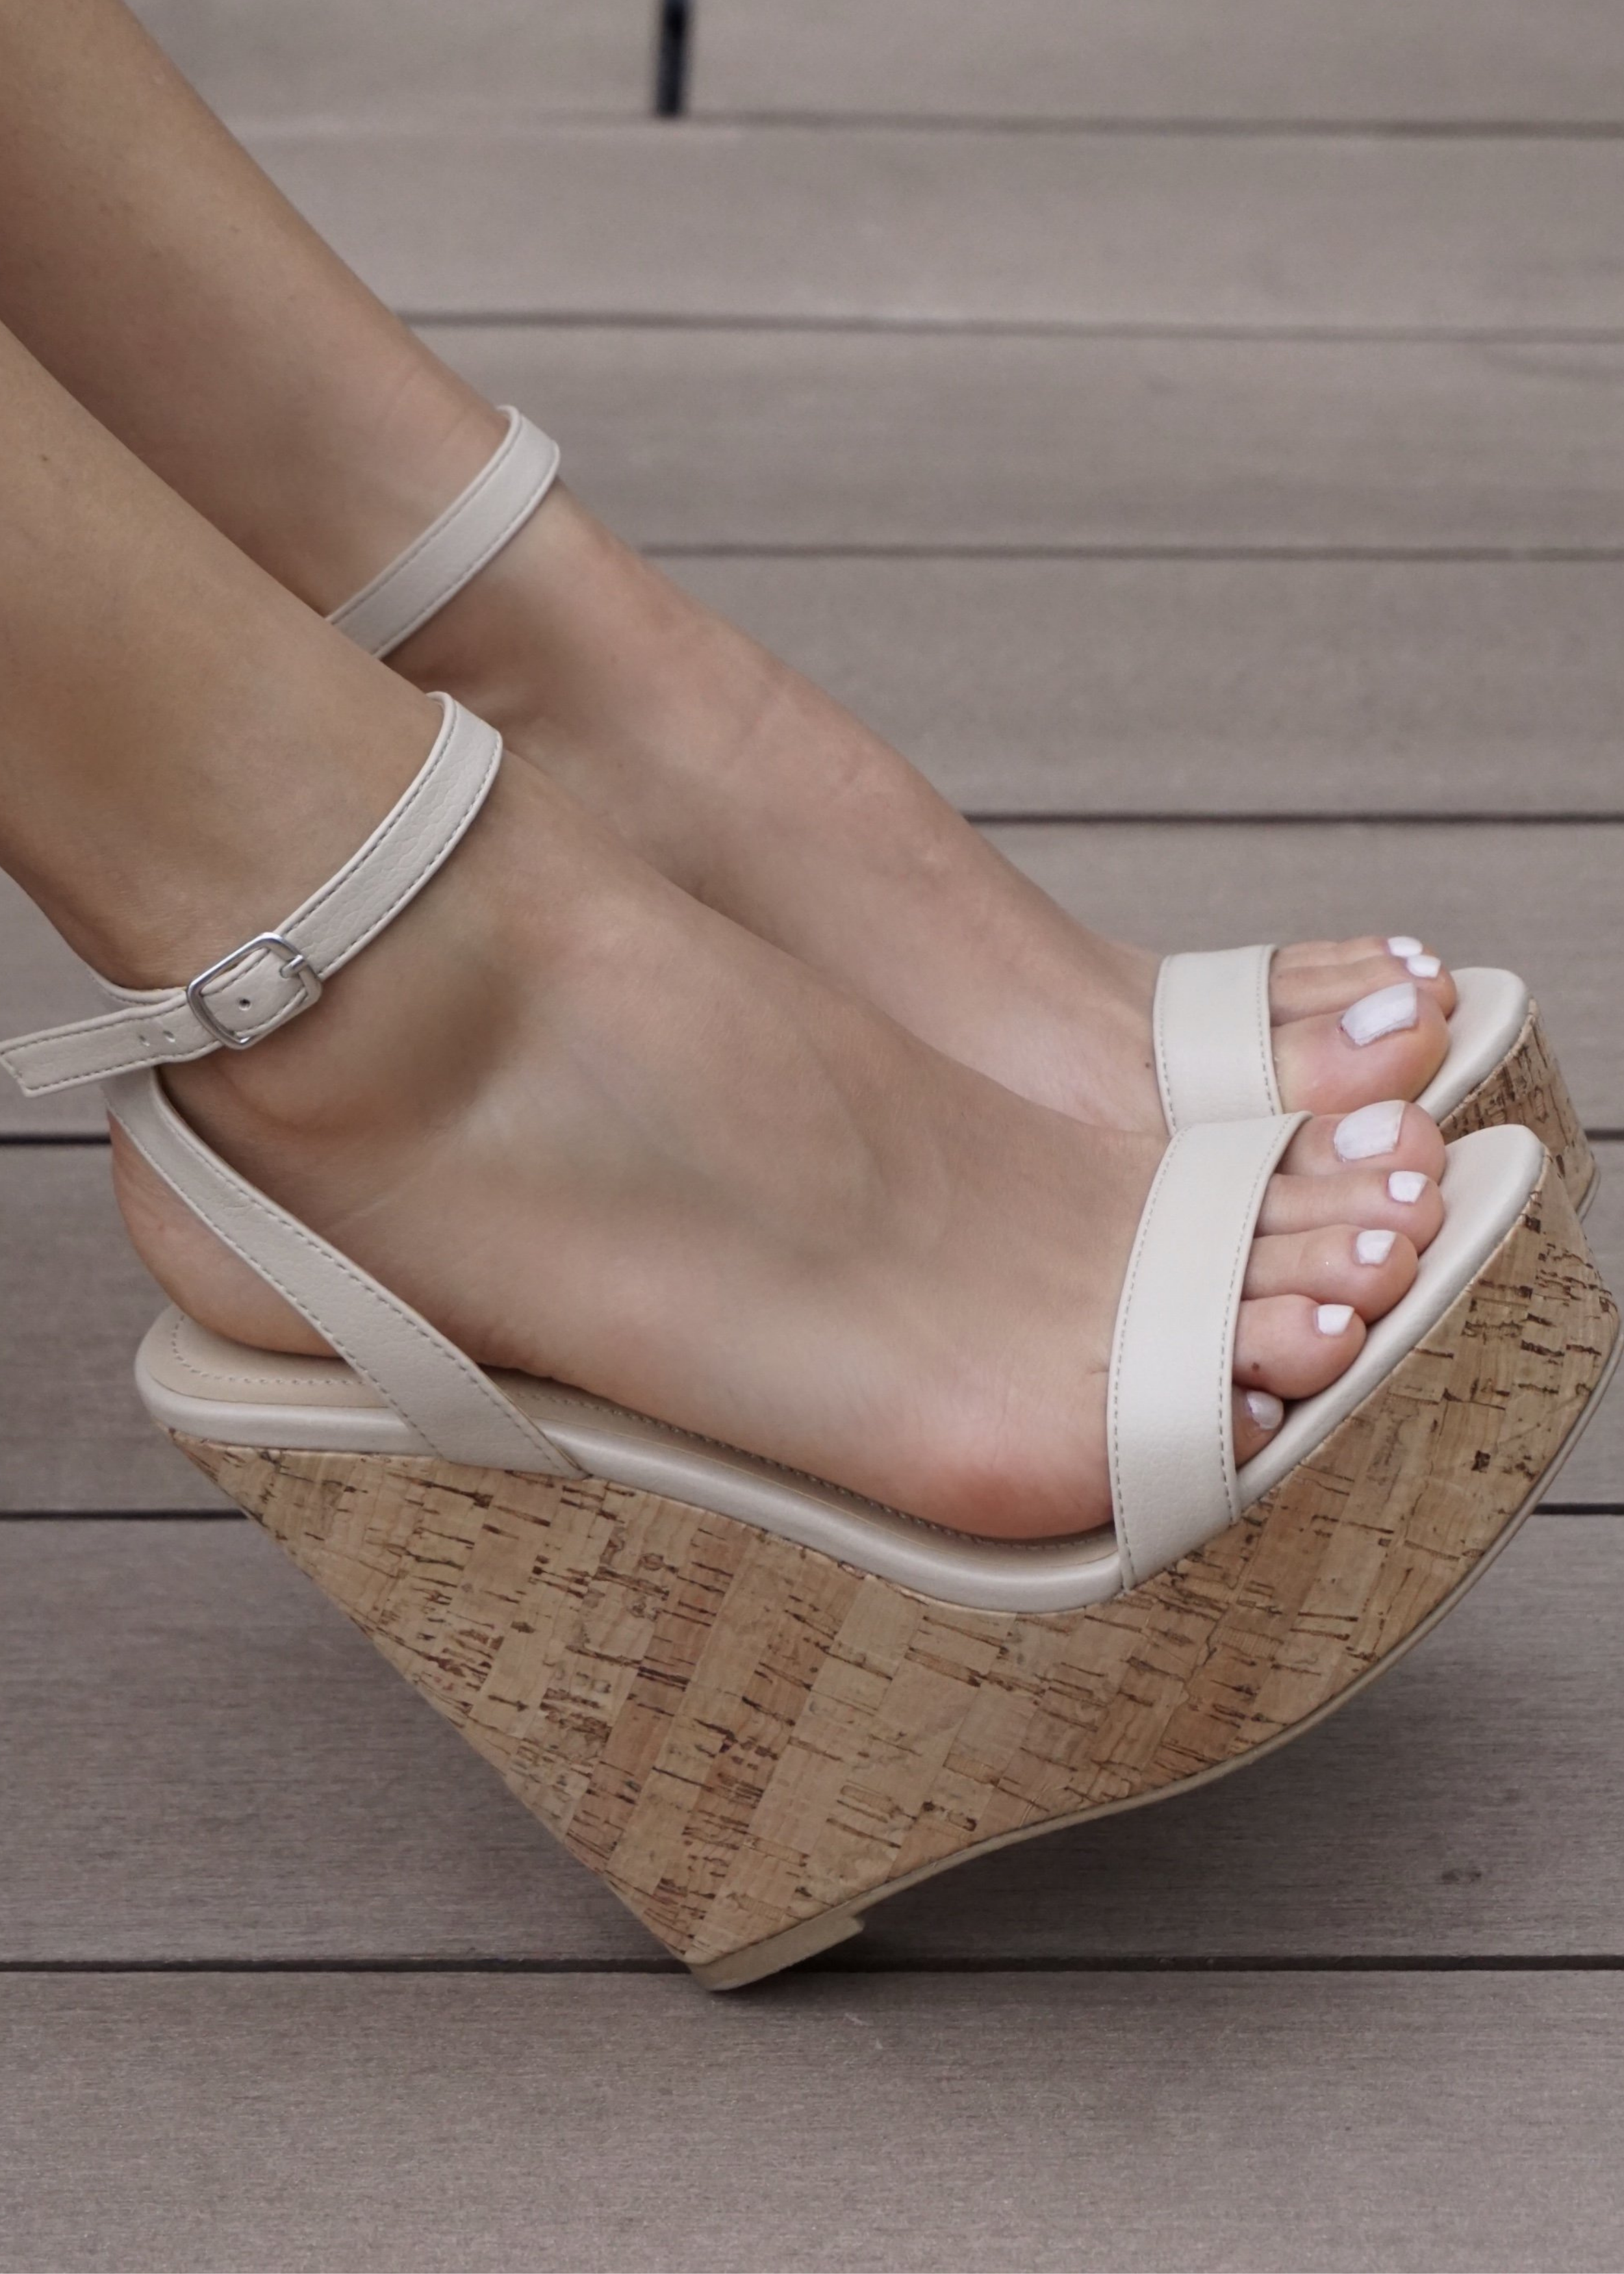 Rachel Zoe Hudson Triple Stacked Platform Wedge Heels Leather Shoes Women's  6 M | eBay